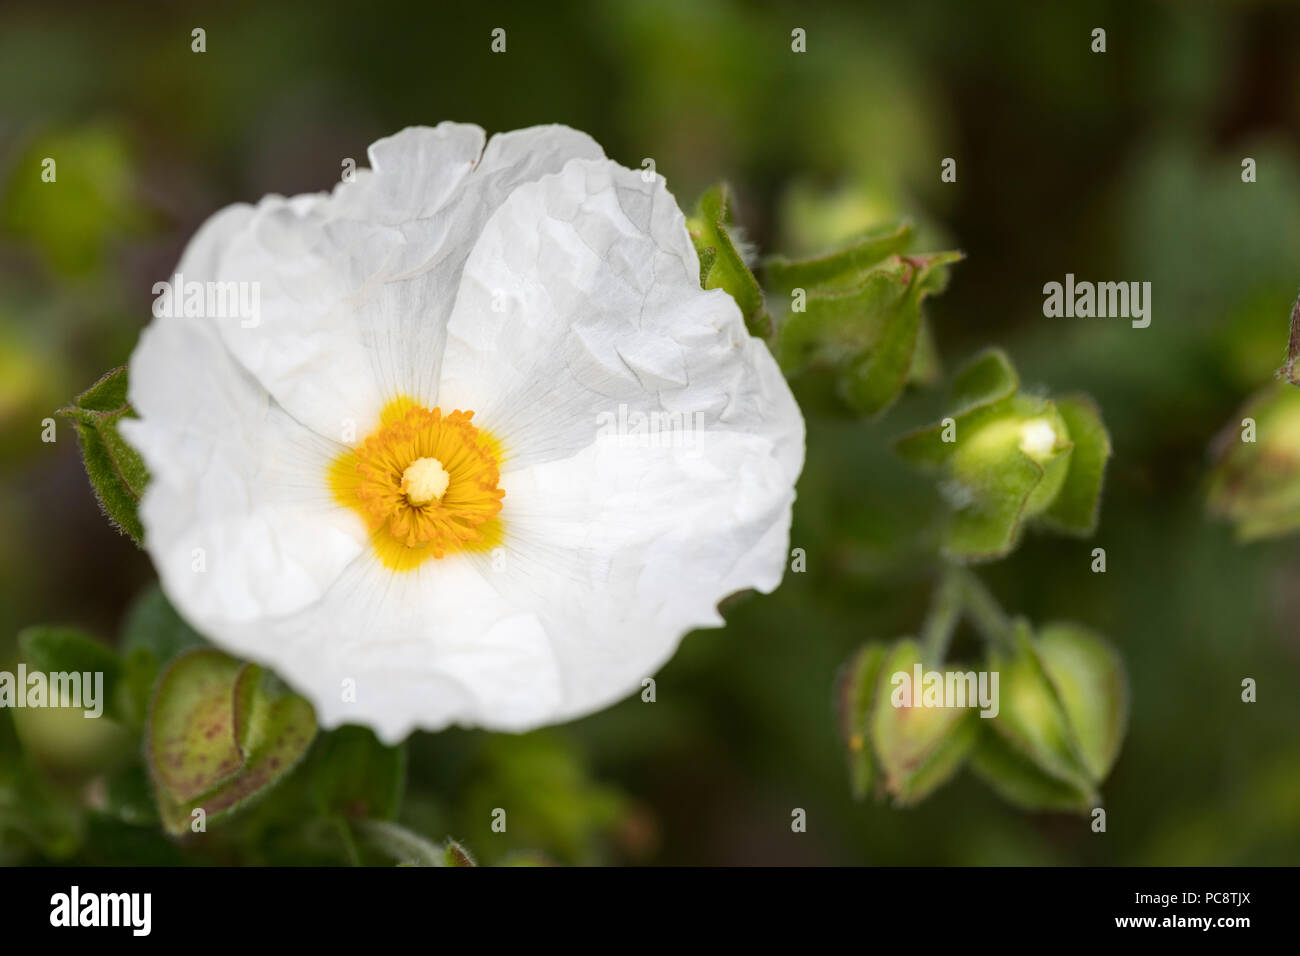 Close up  of a white Cistus x obtusifolius 'Thrive' / Rock Rose flowering in an English garden Stock Photo